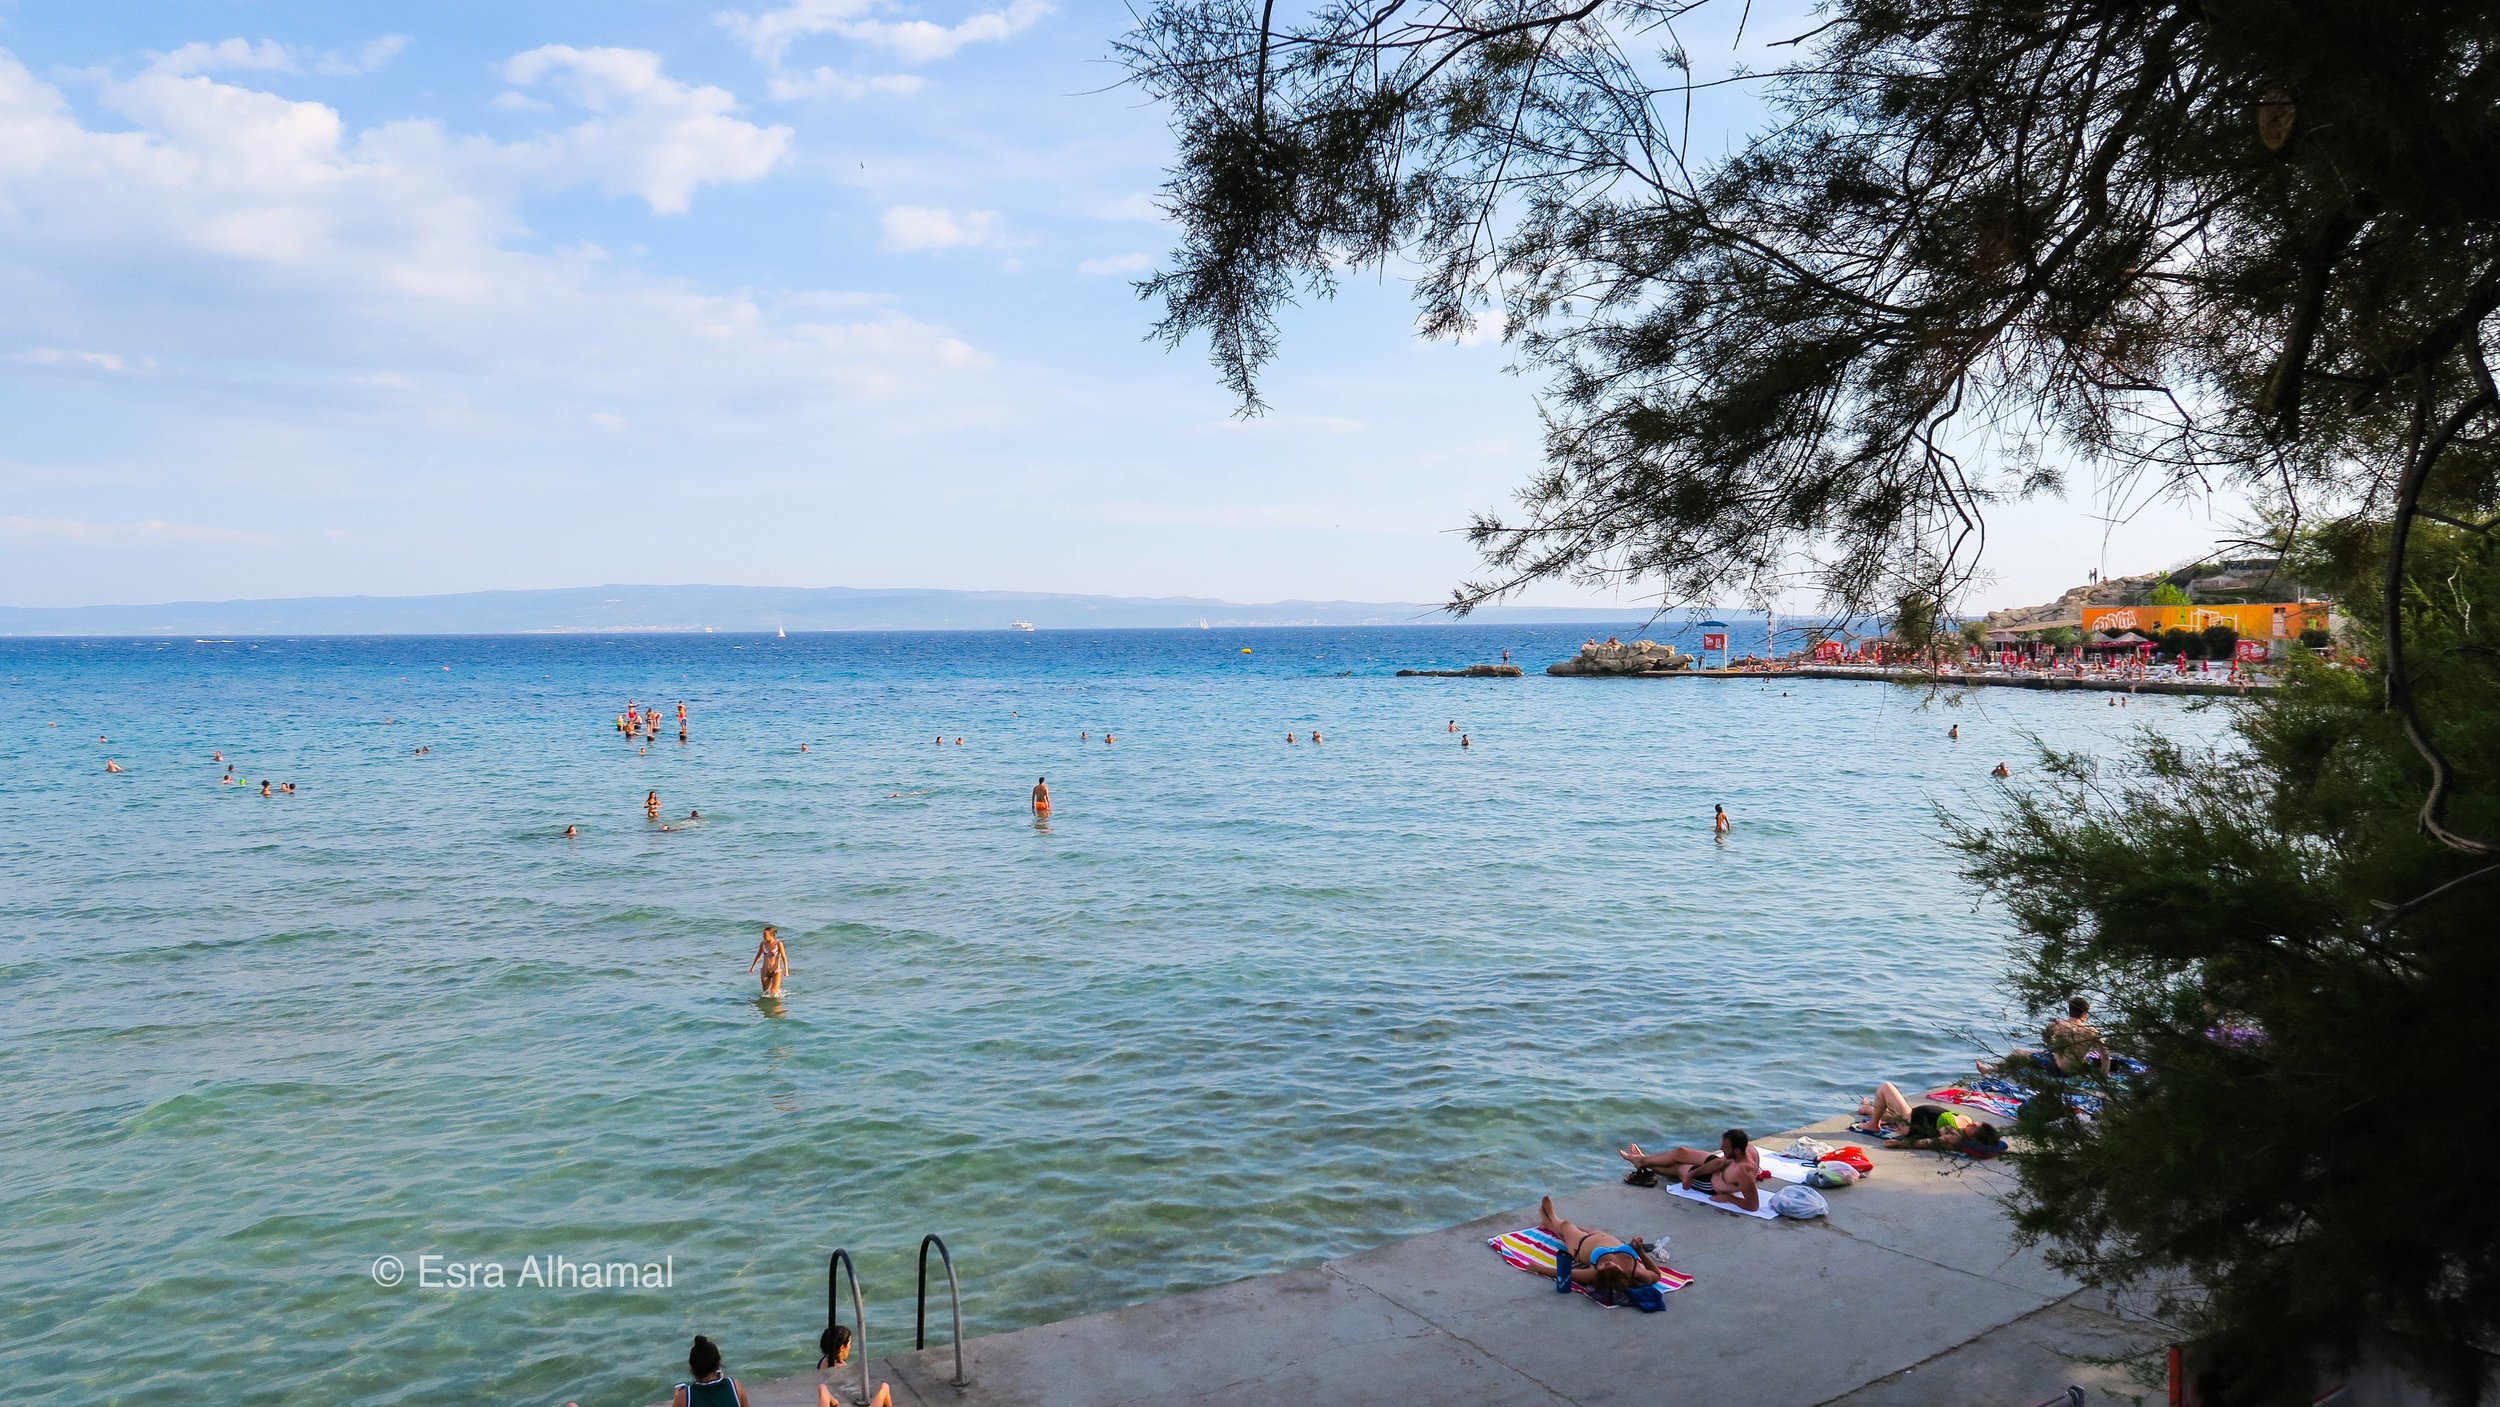 The beach in Split